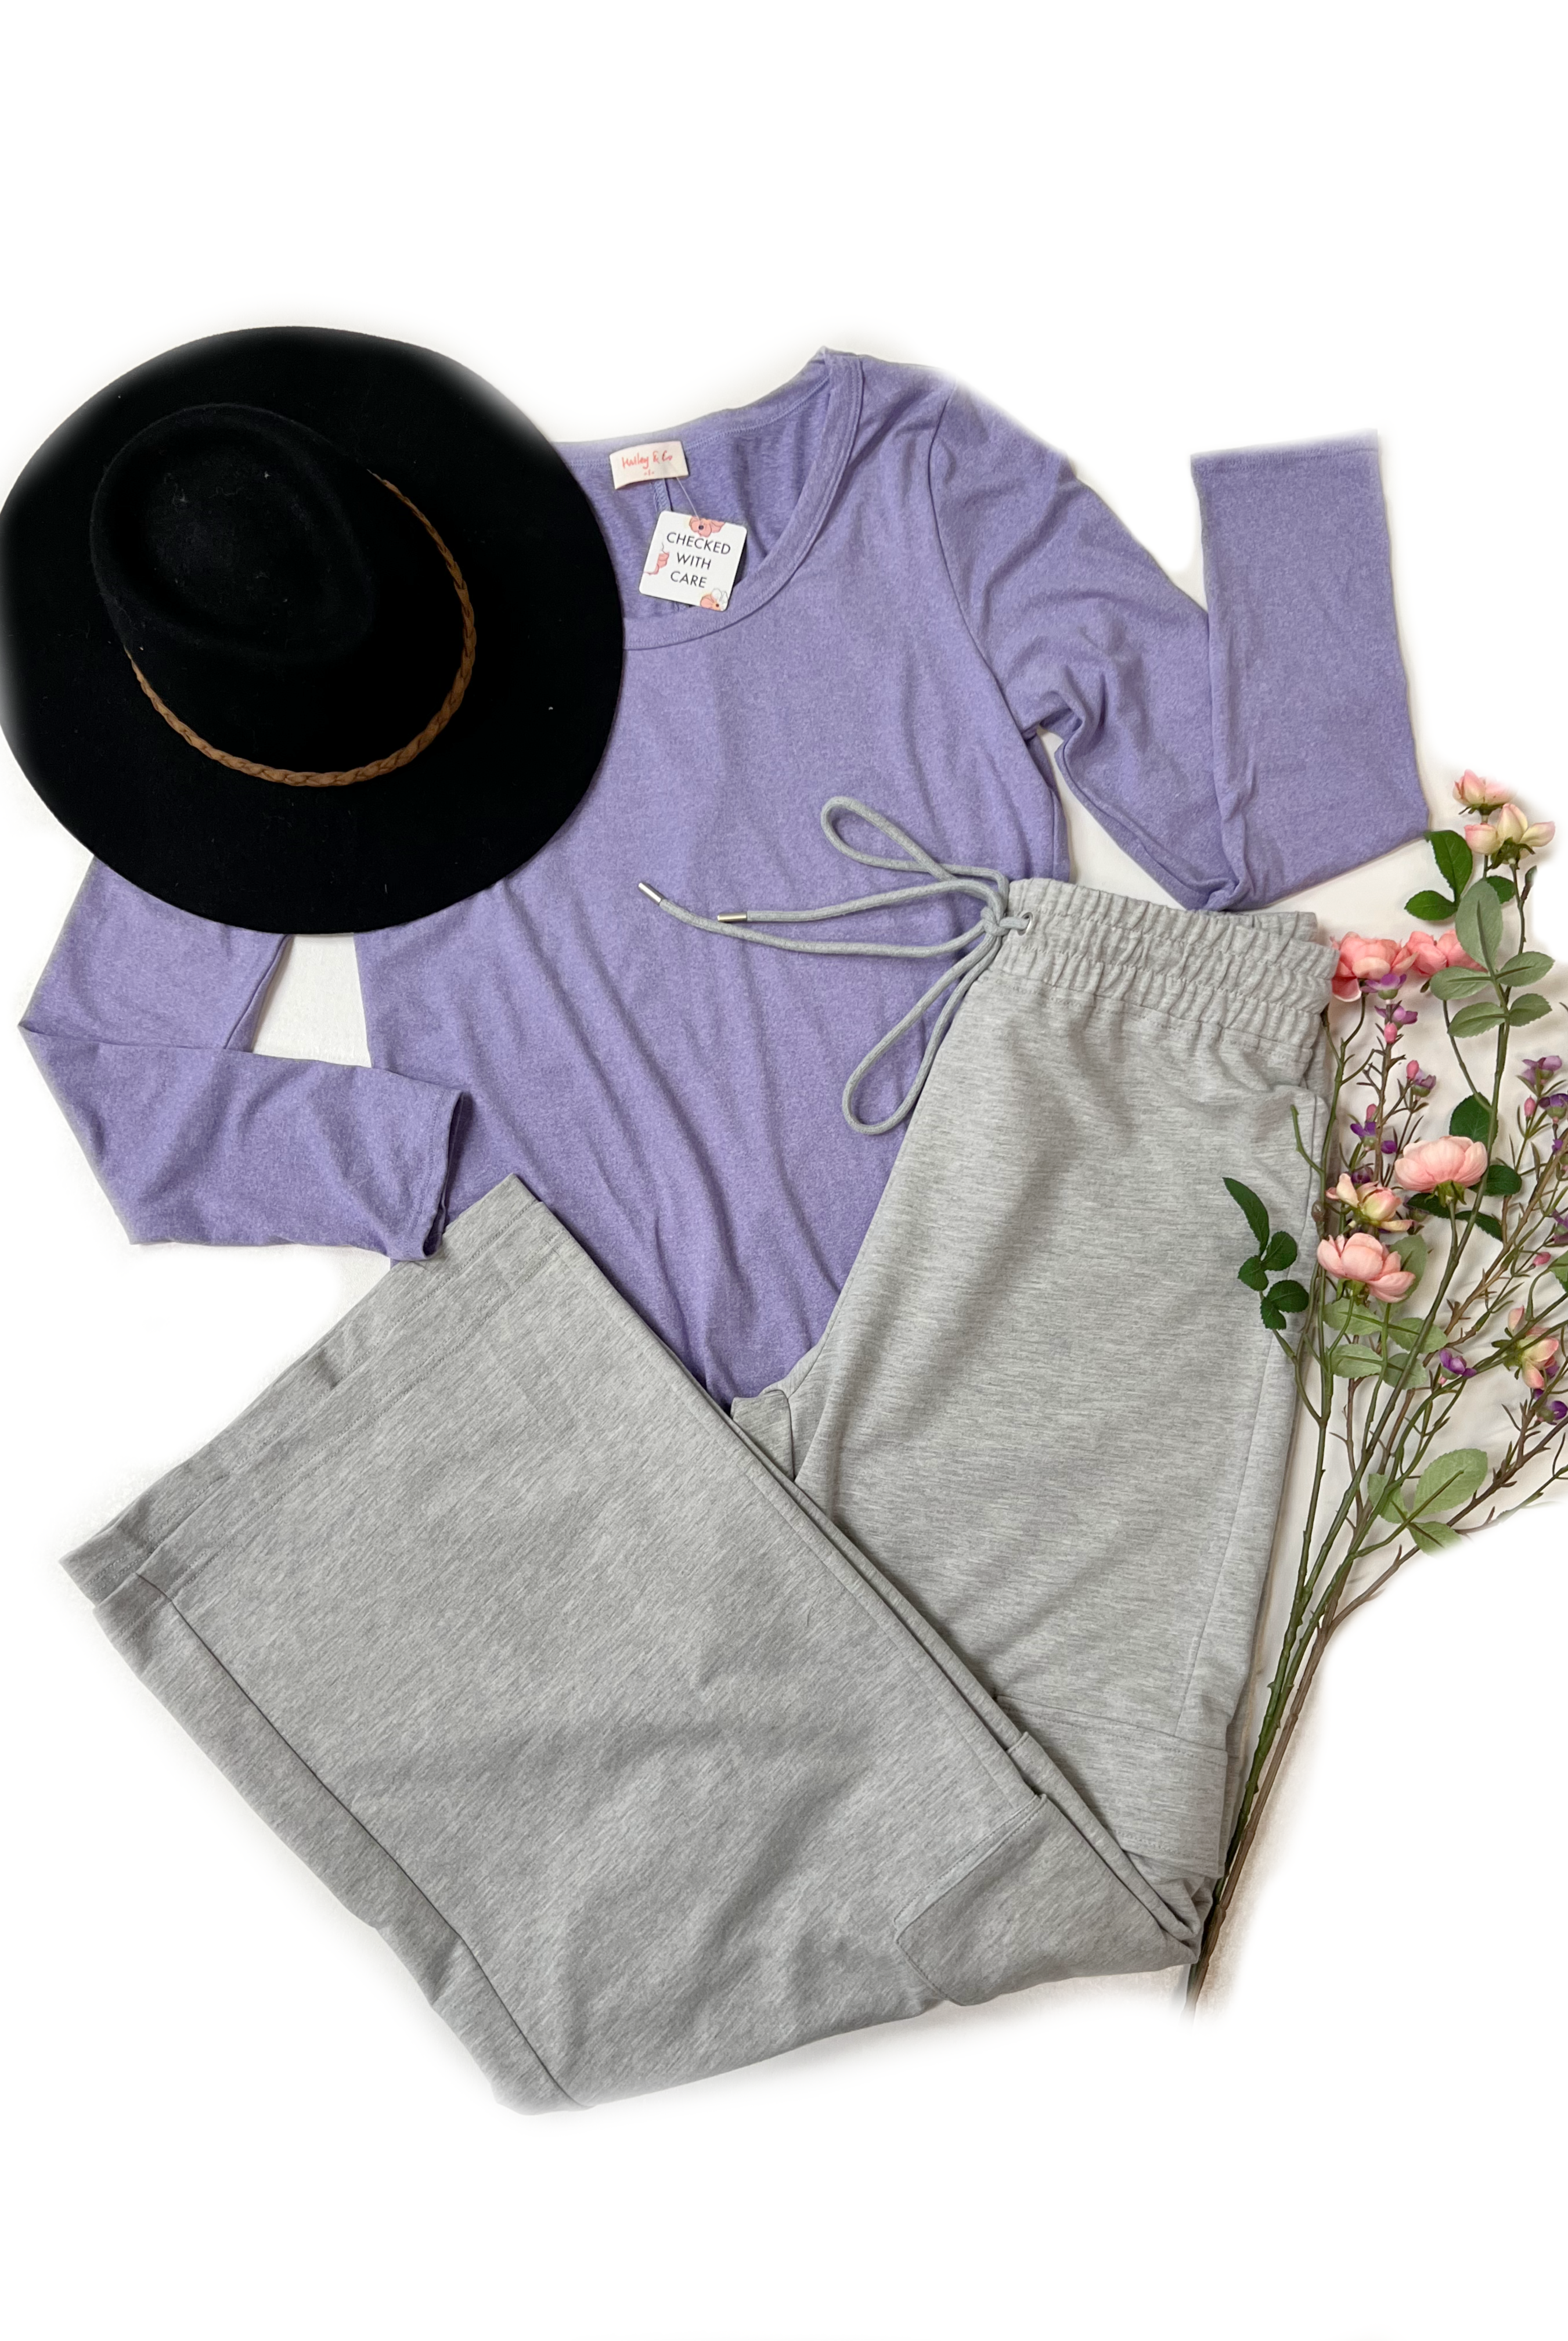 Powder Purple Long Sleeve-Boutique Simplified-Urban Threadz Boutique, Women's Fashion Boutique in Saugatuck, MI